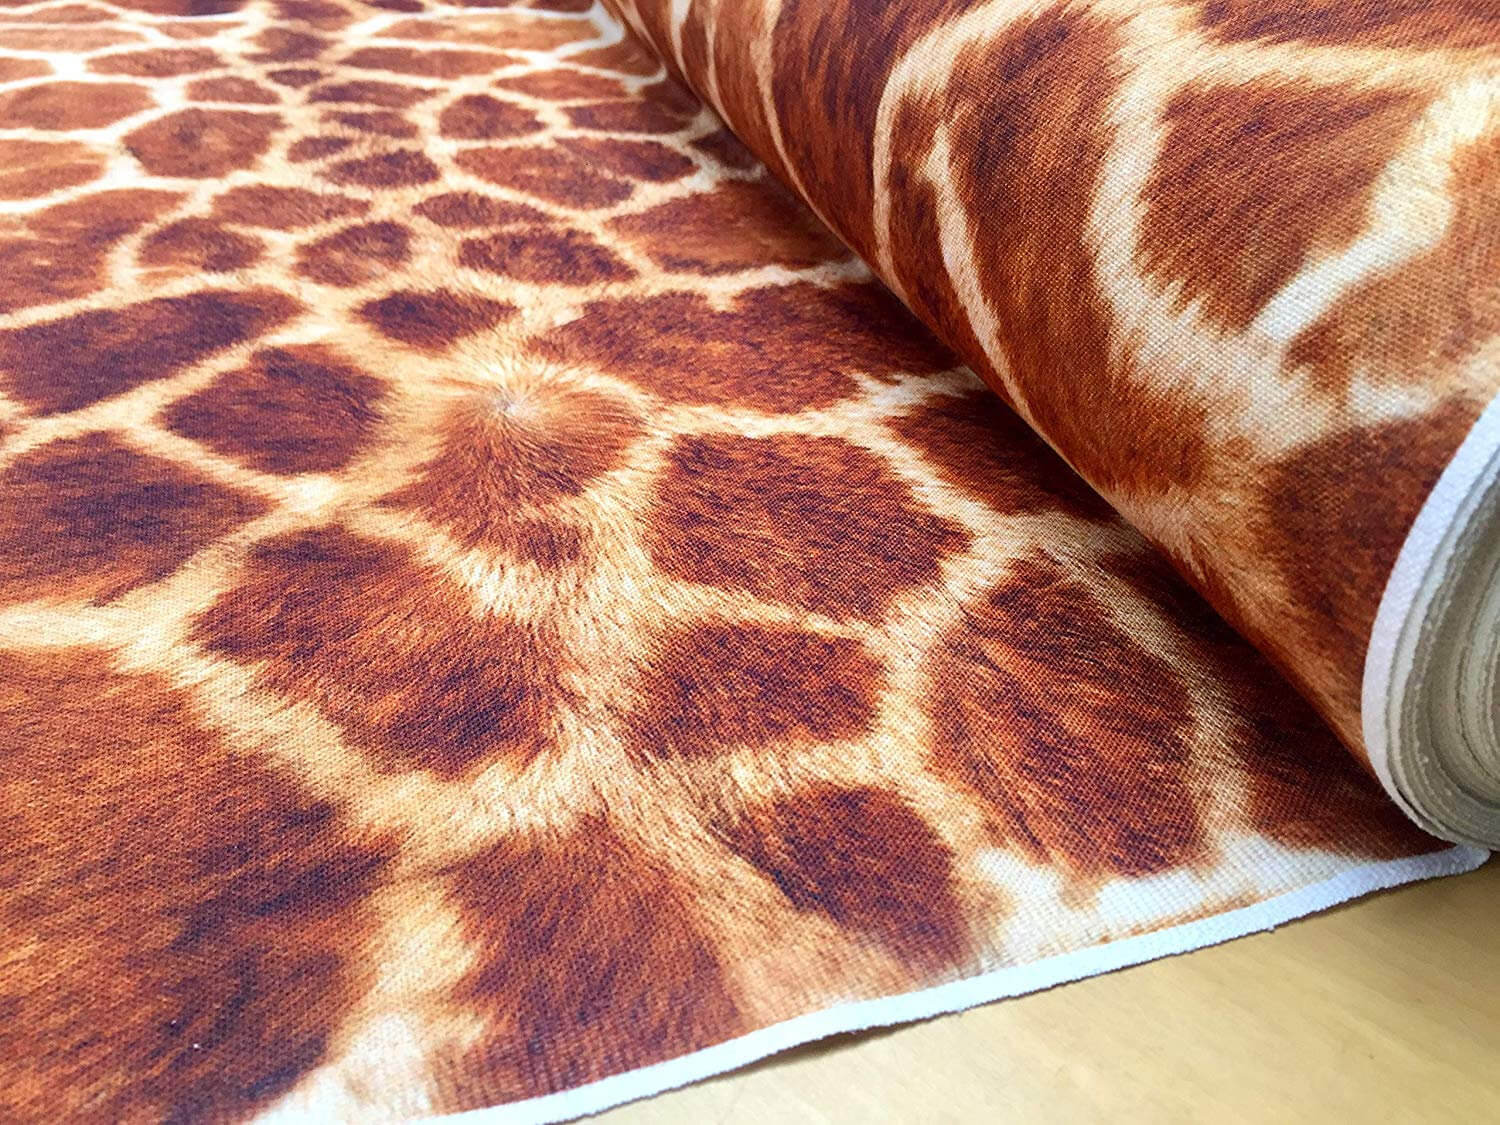 Giraffe Fabric Digital Animal Print Cotton Material - curtains, decor,  dress, furnishing - Brown, Bronze & Cream Squares -55''/140cm wide - Lush  Fabric